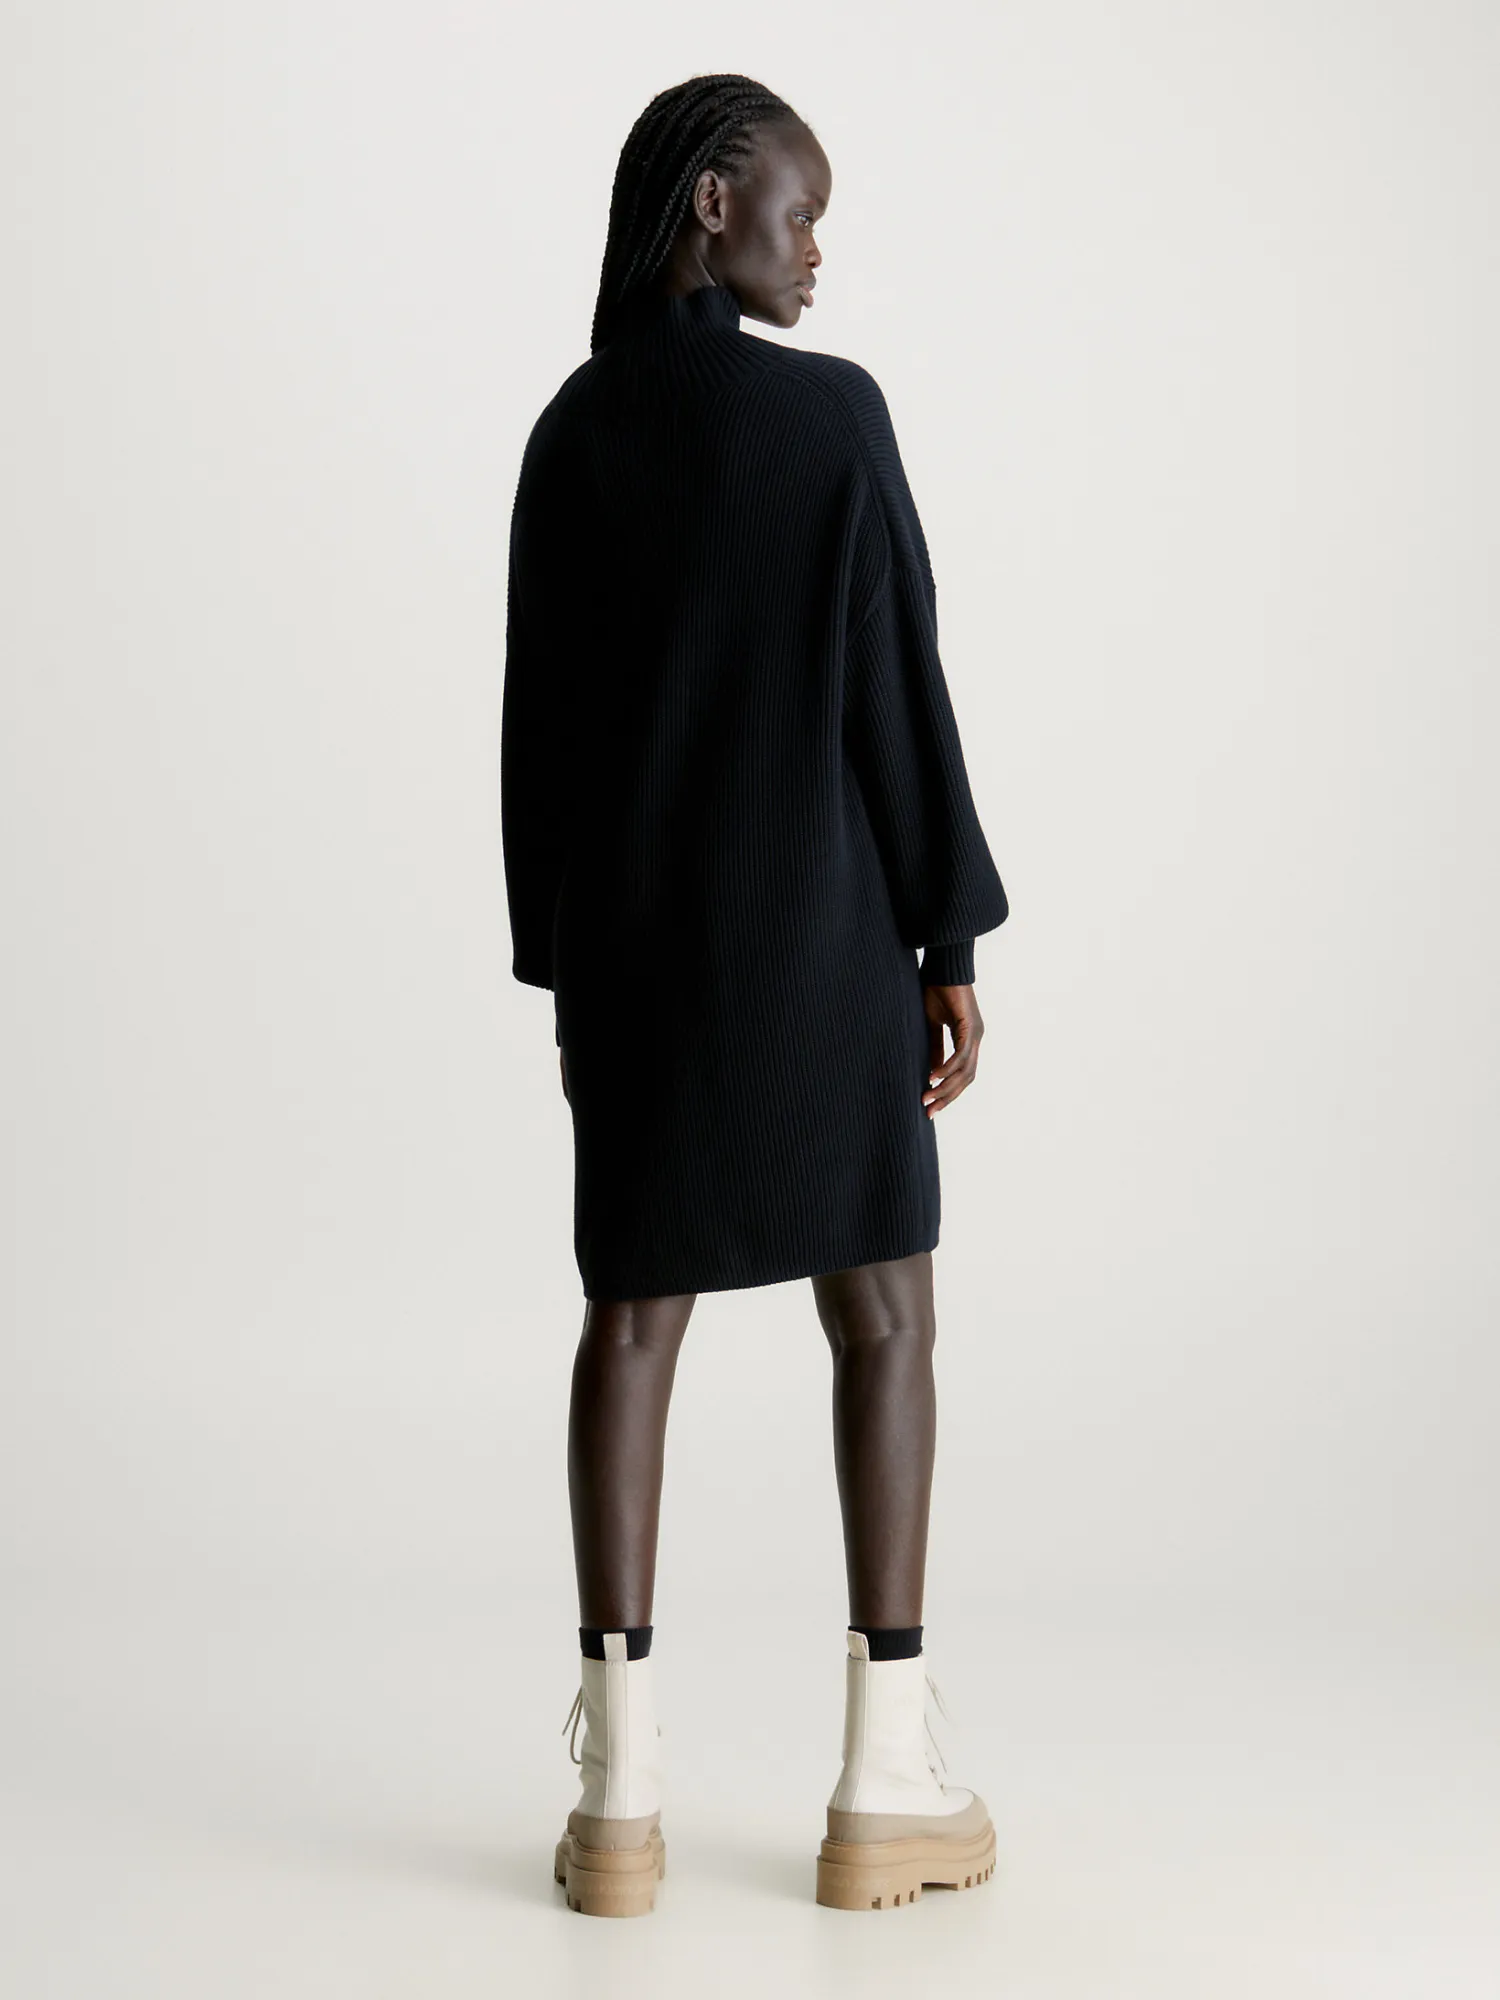 CALVIN Choice+Attitude Woven Black JEANS Sweater Label CK Dress KLEIN - | Loose